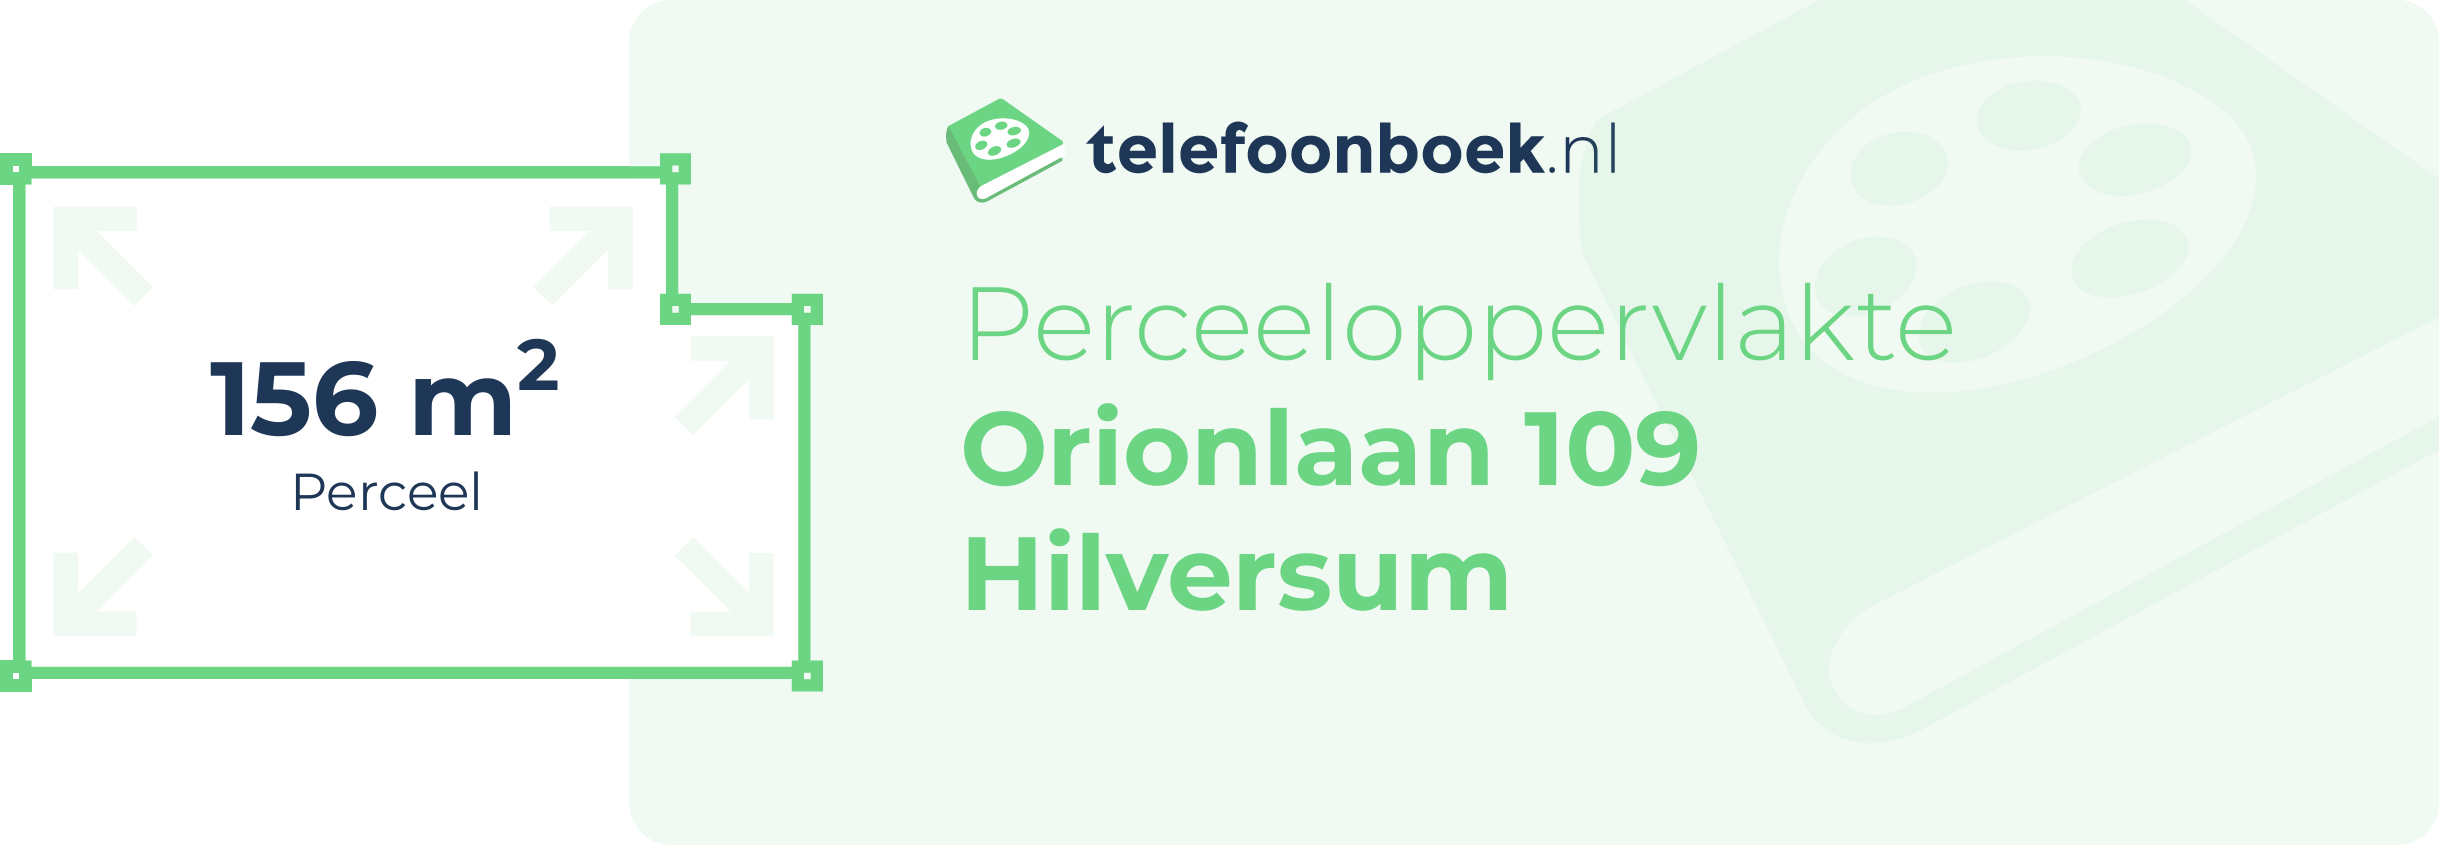 Perceeloppervlakte Orionlaan 109 Hilversum